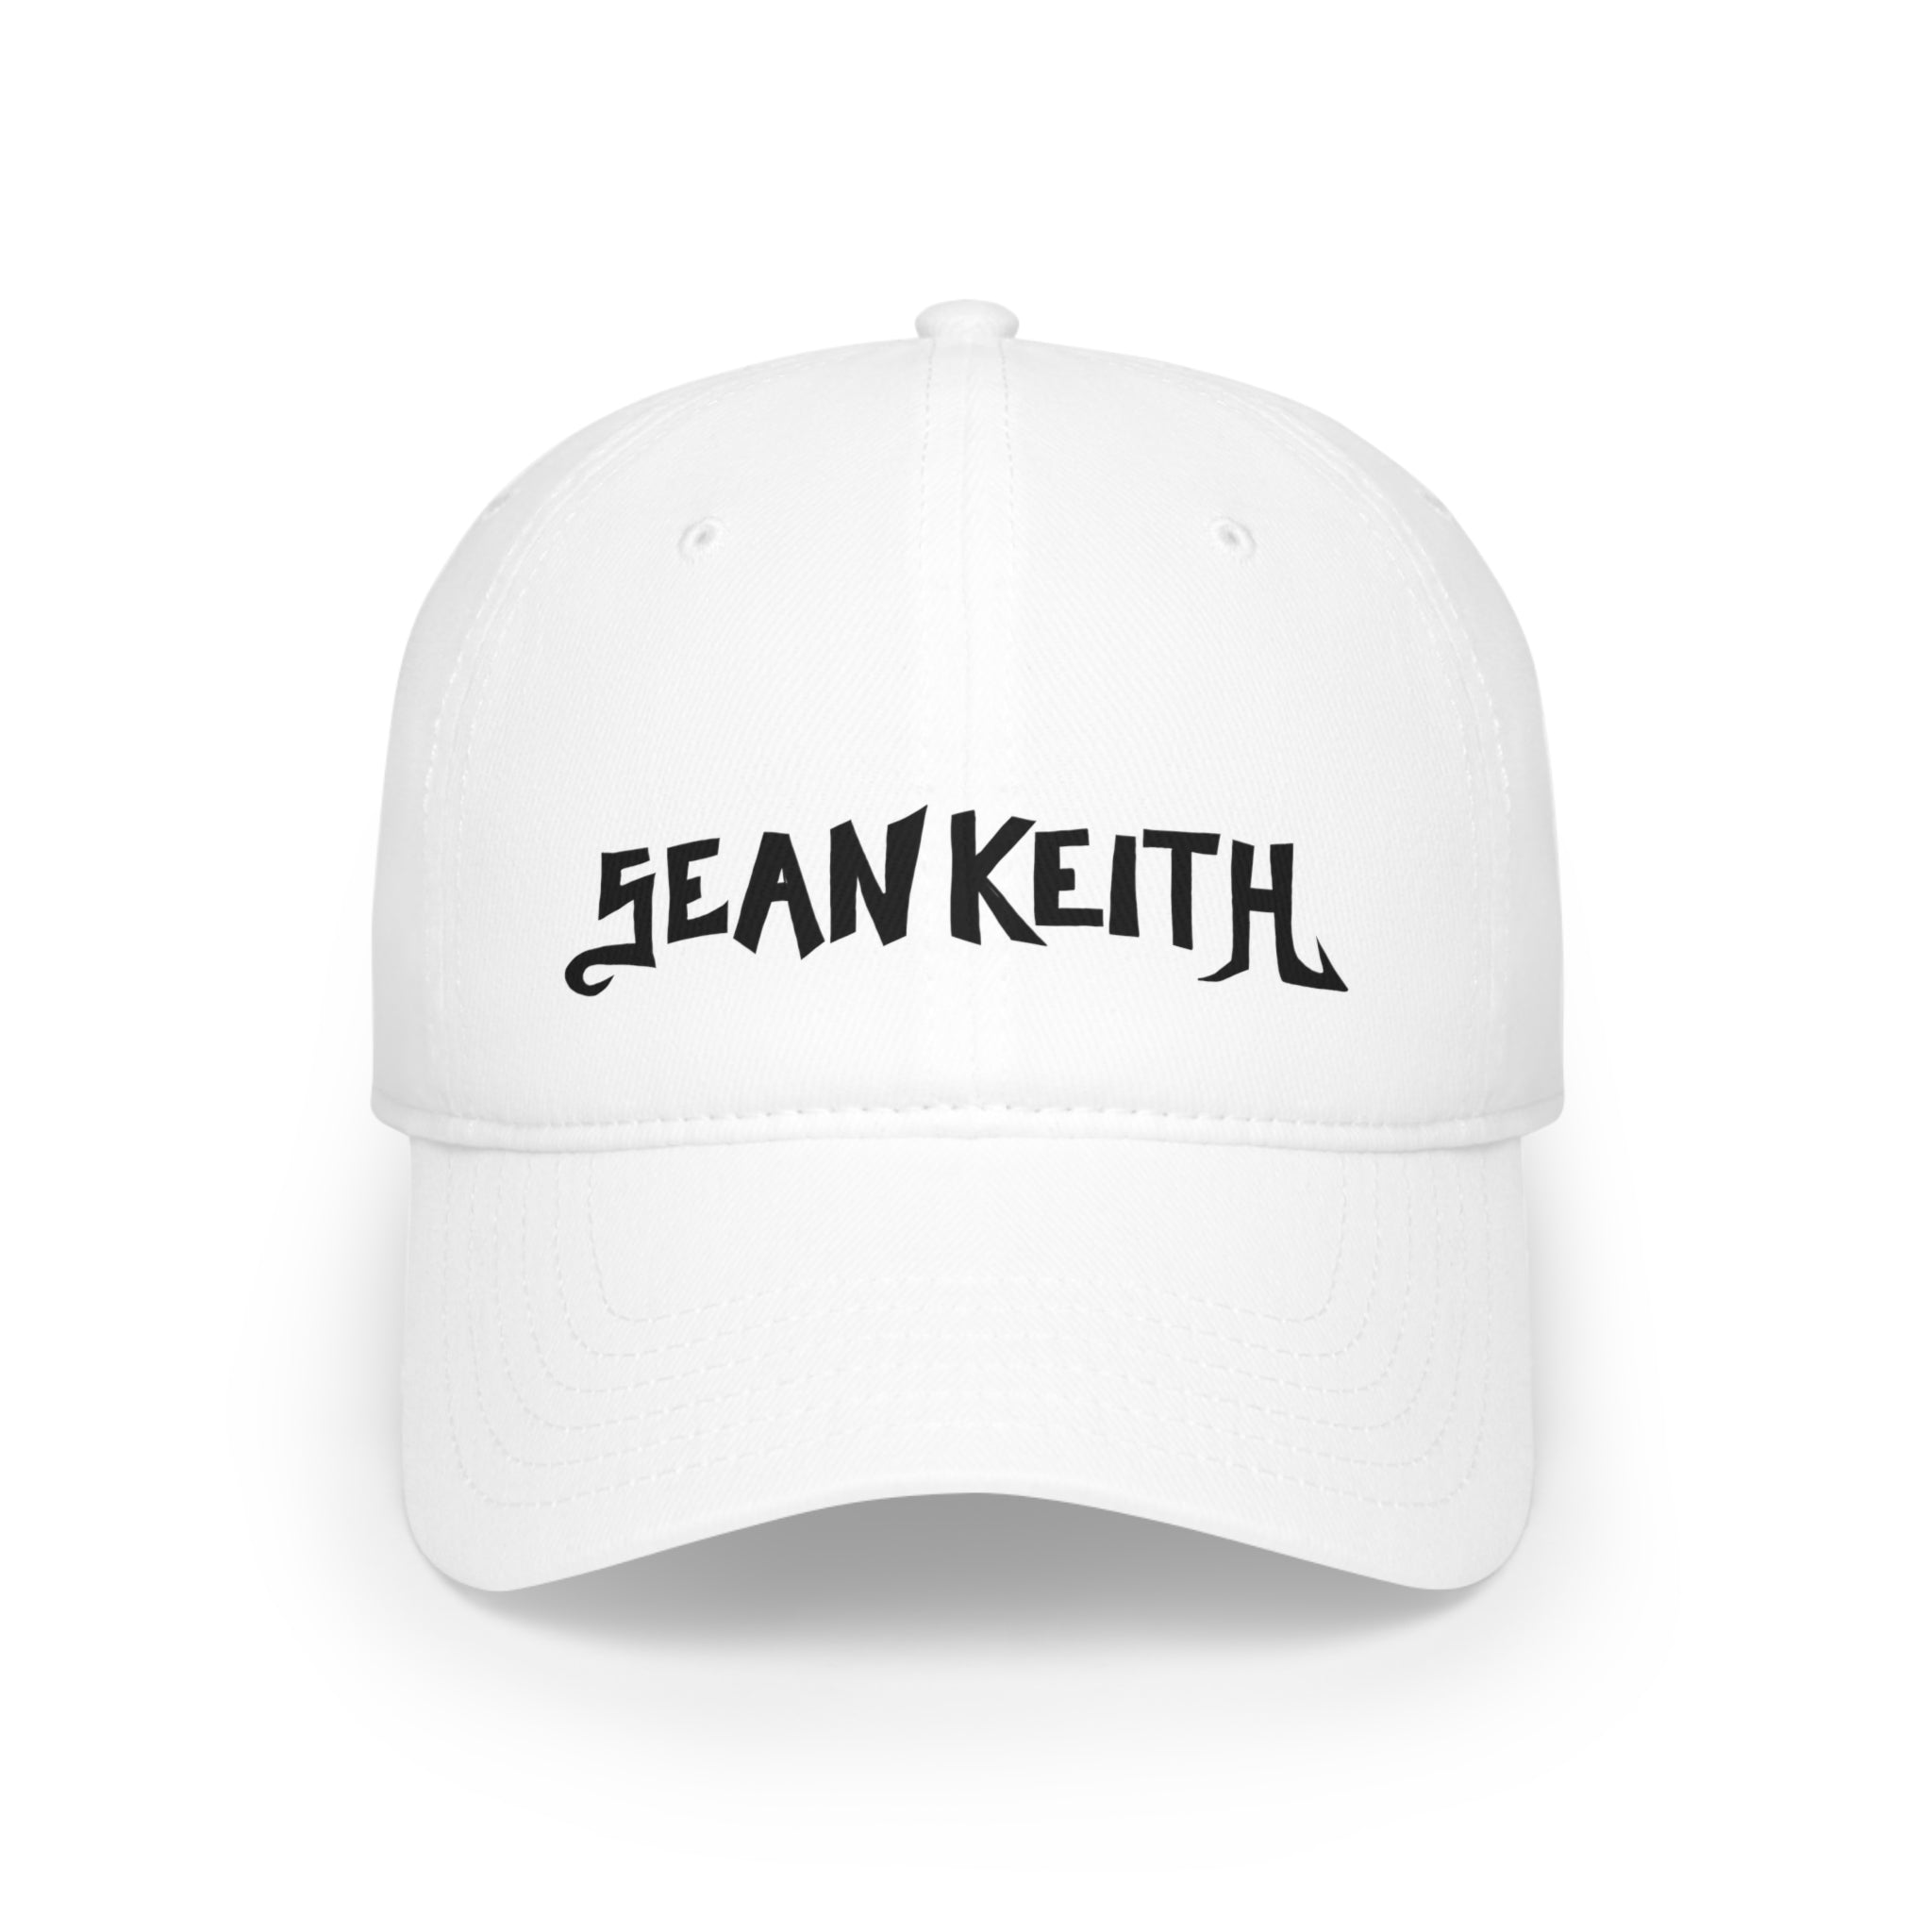 Sean Keith Low Profile Baseball Cap - Sean Keith Art